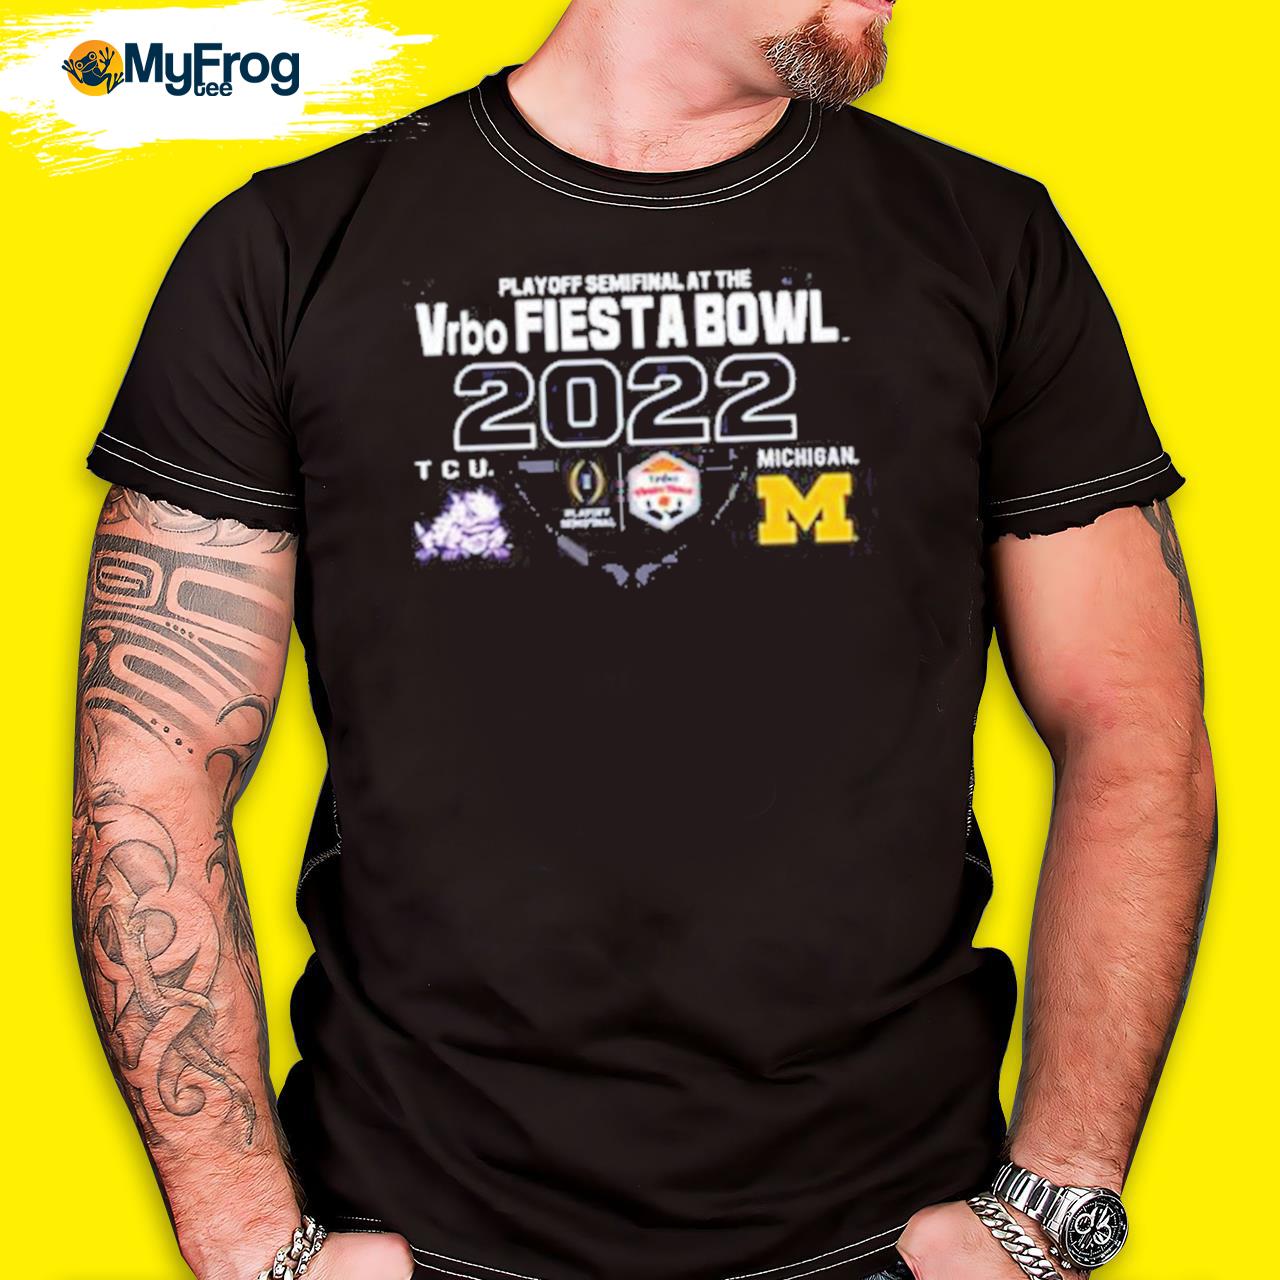 Michigan Vs Tcu 2022 College Football Playoff Semifinal At The Fiesta Bowl Match Up Shirt